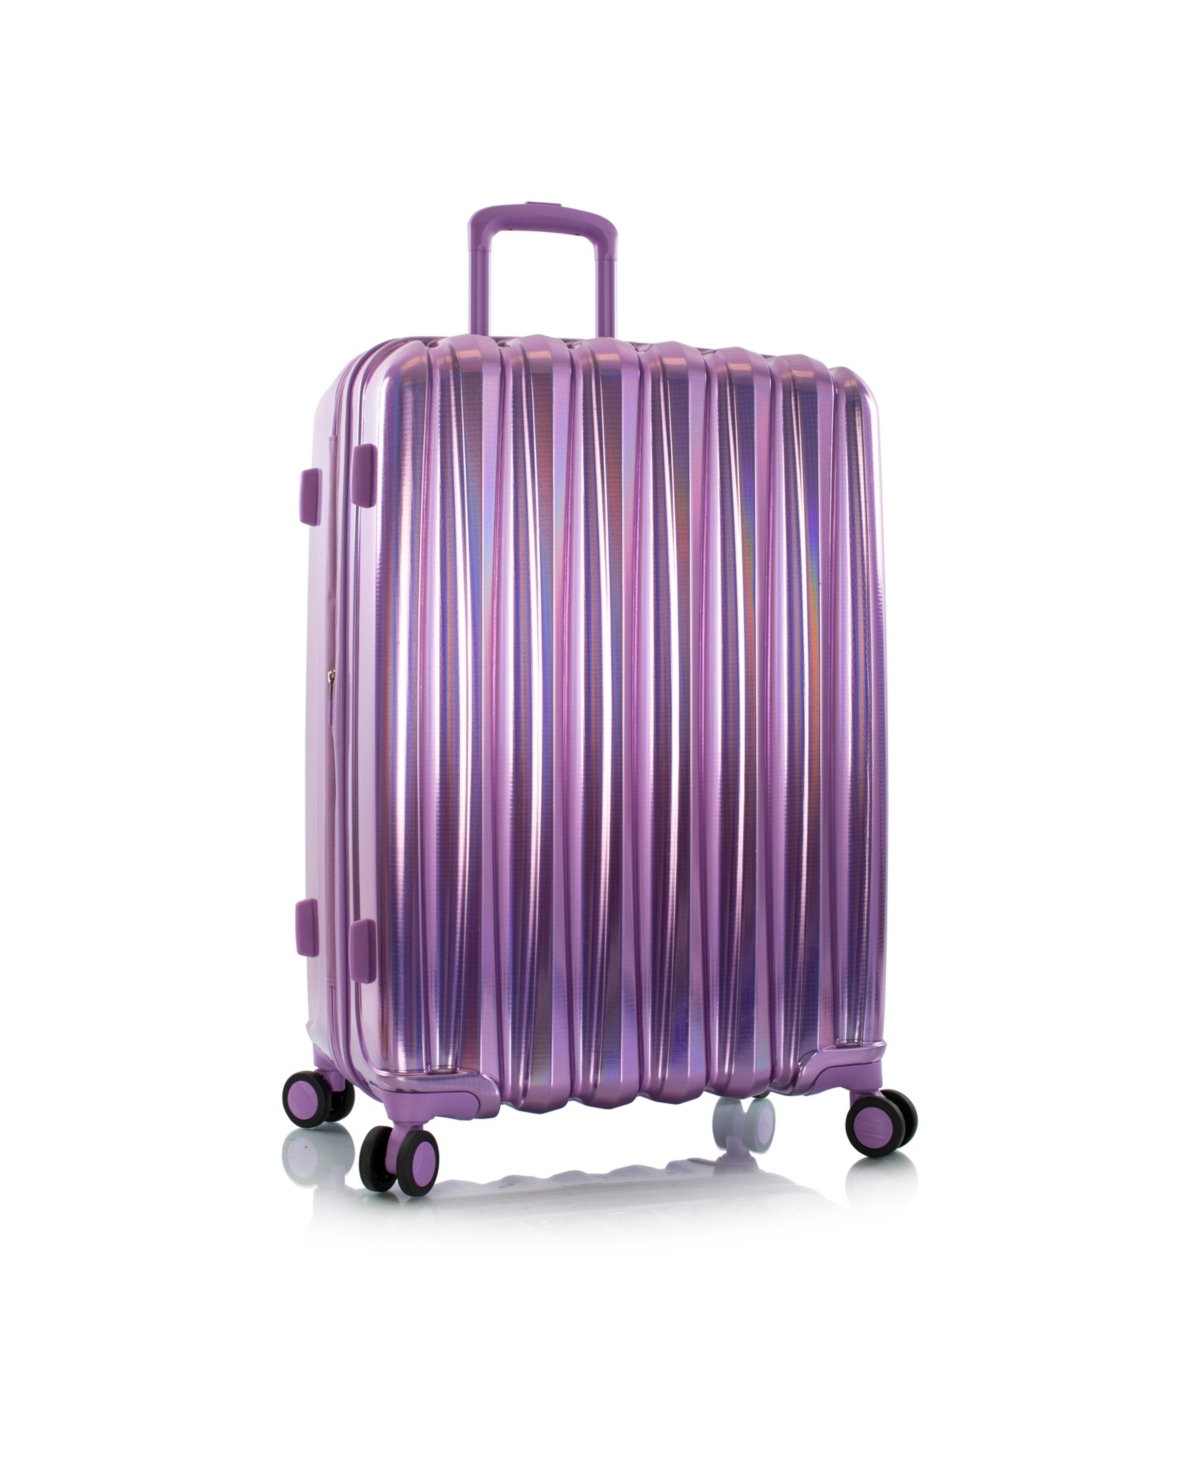 Astro 30" Hardside Spinner Luggage - Purple